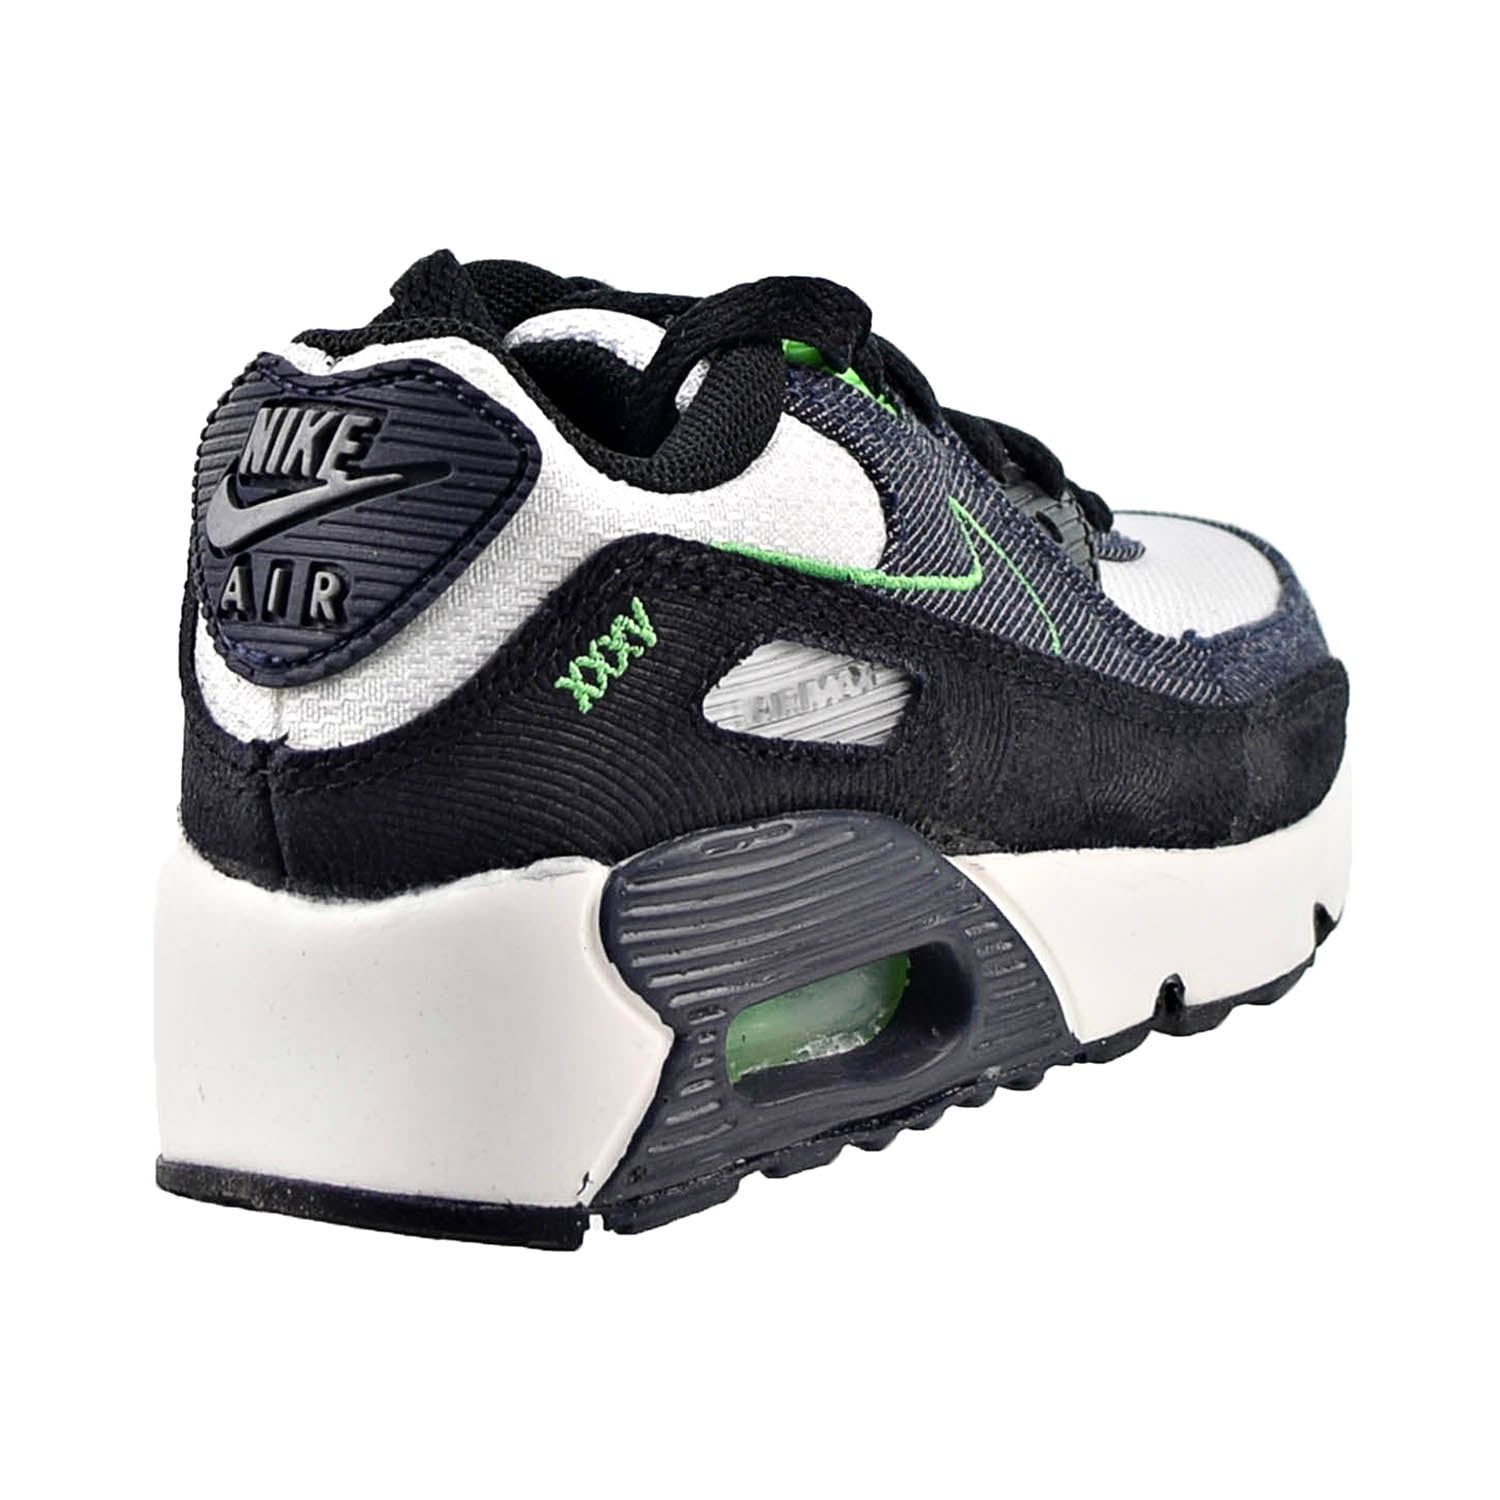 Nike Air Max 90 LTR SE (PS) Little Kids' Shoes Black-Scream Green 